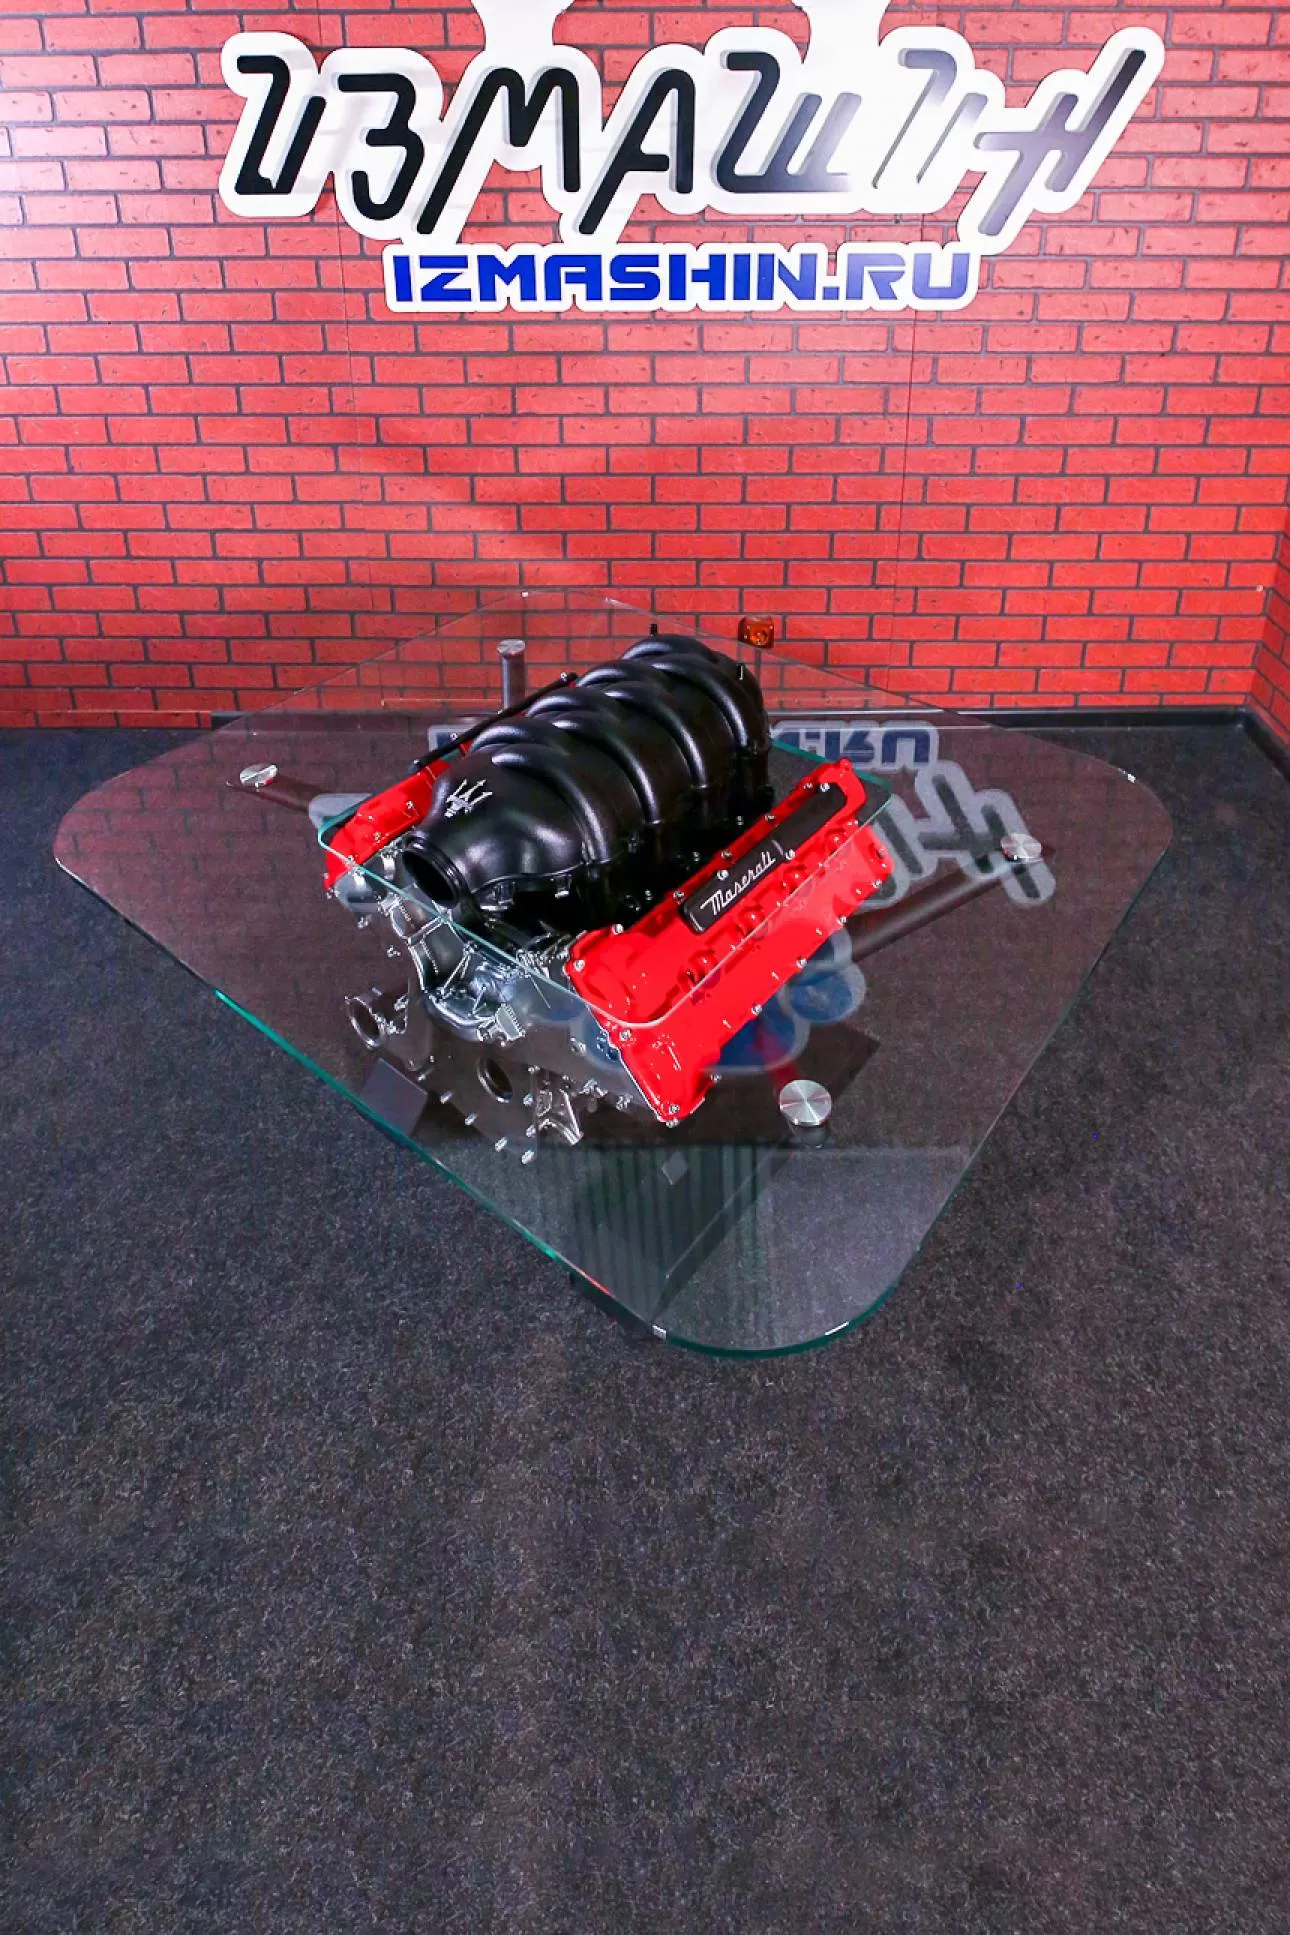 Стол из двигателя Maserati V8. Фотография 1